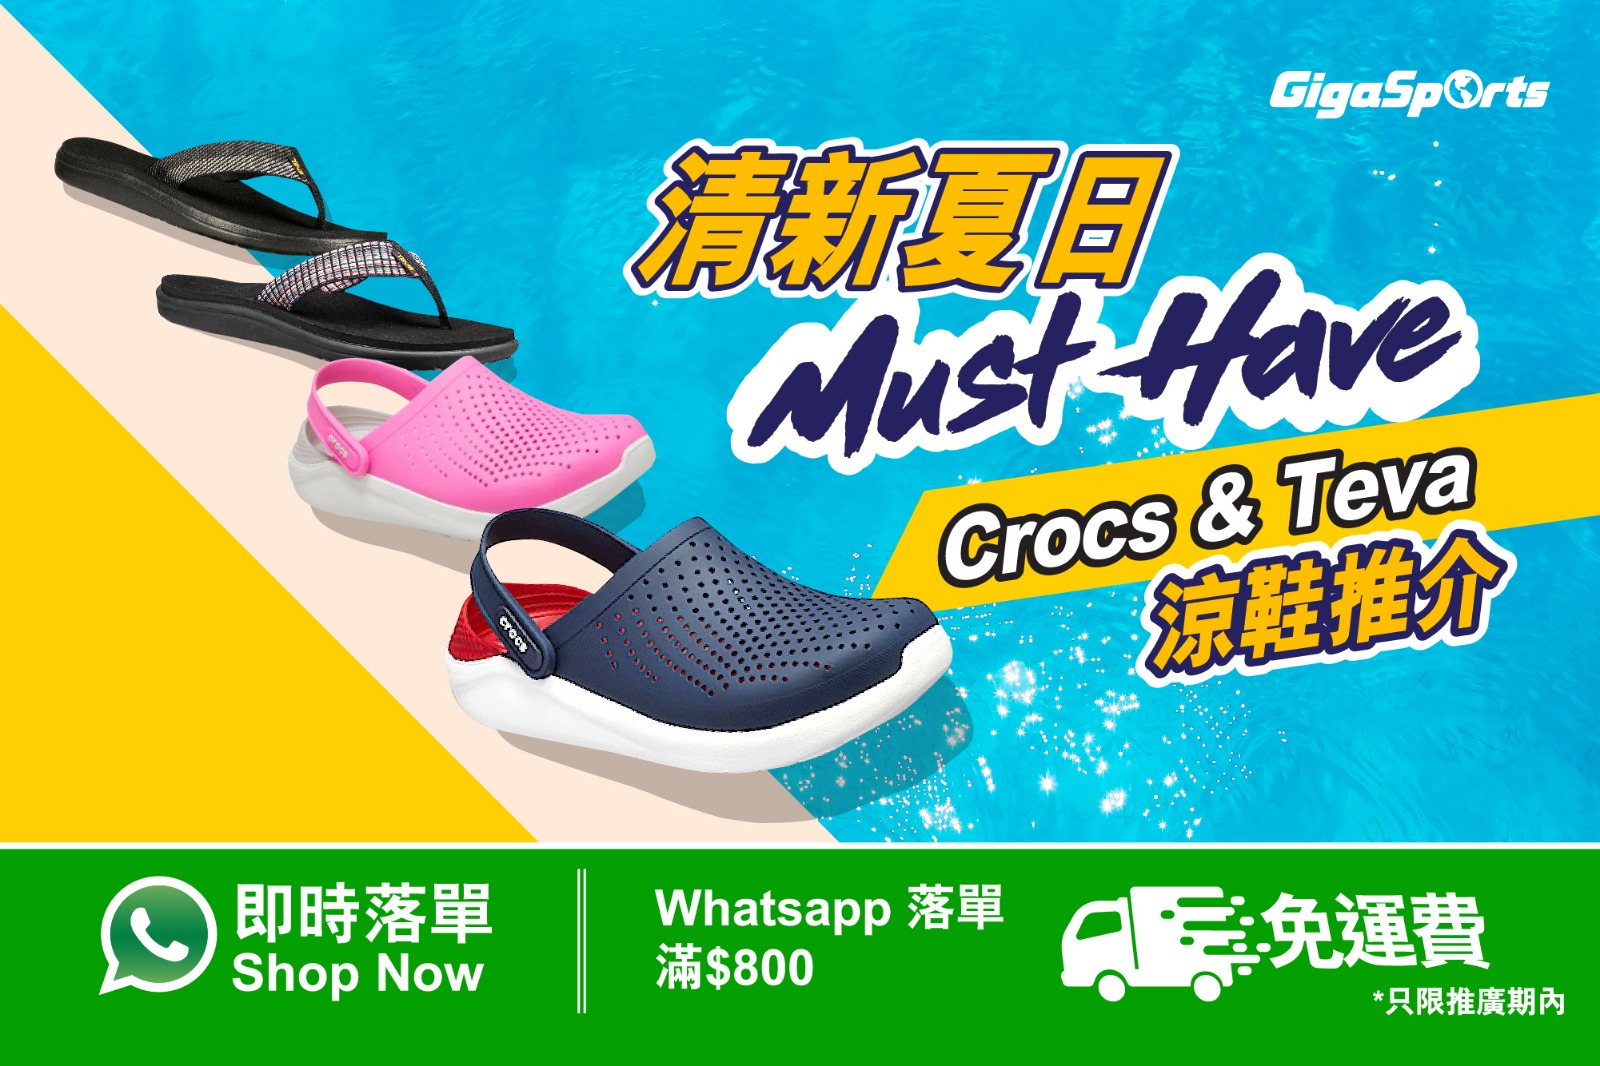 【#WhatsApp落單】清新夏日Must Have | Crocs & Teva 涼鞋推介